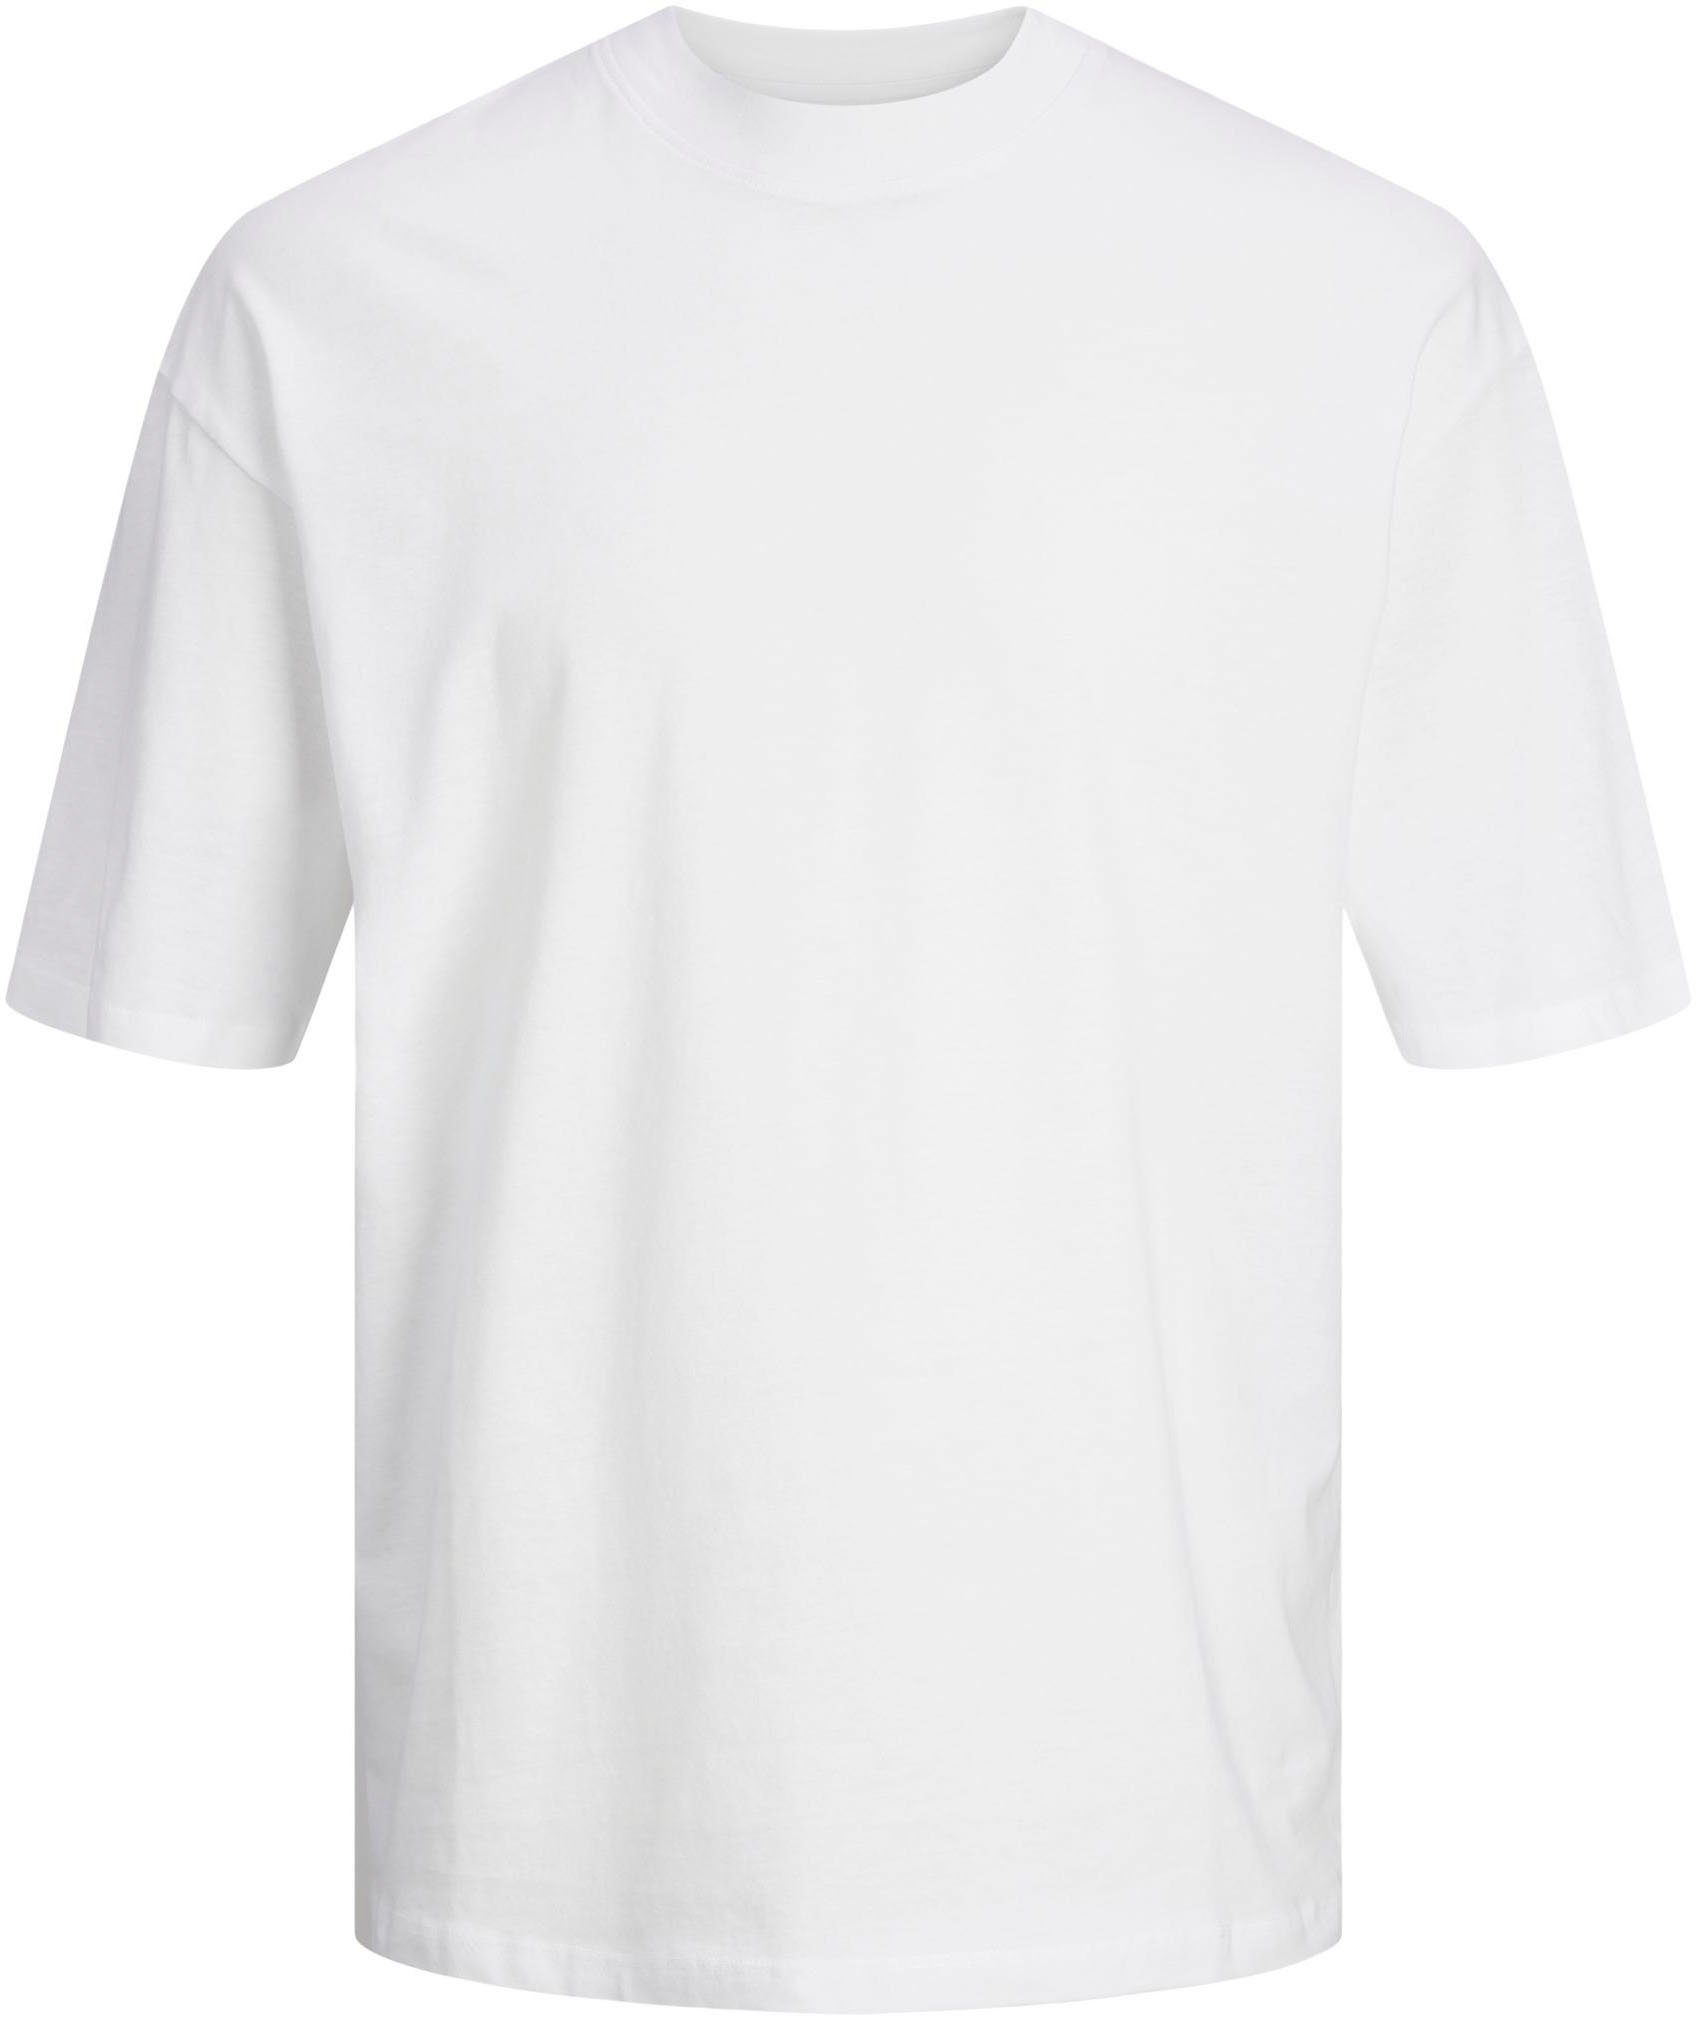 Jones NOOS Jack SS TEE & JJETIMO White T-Shirt